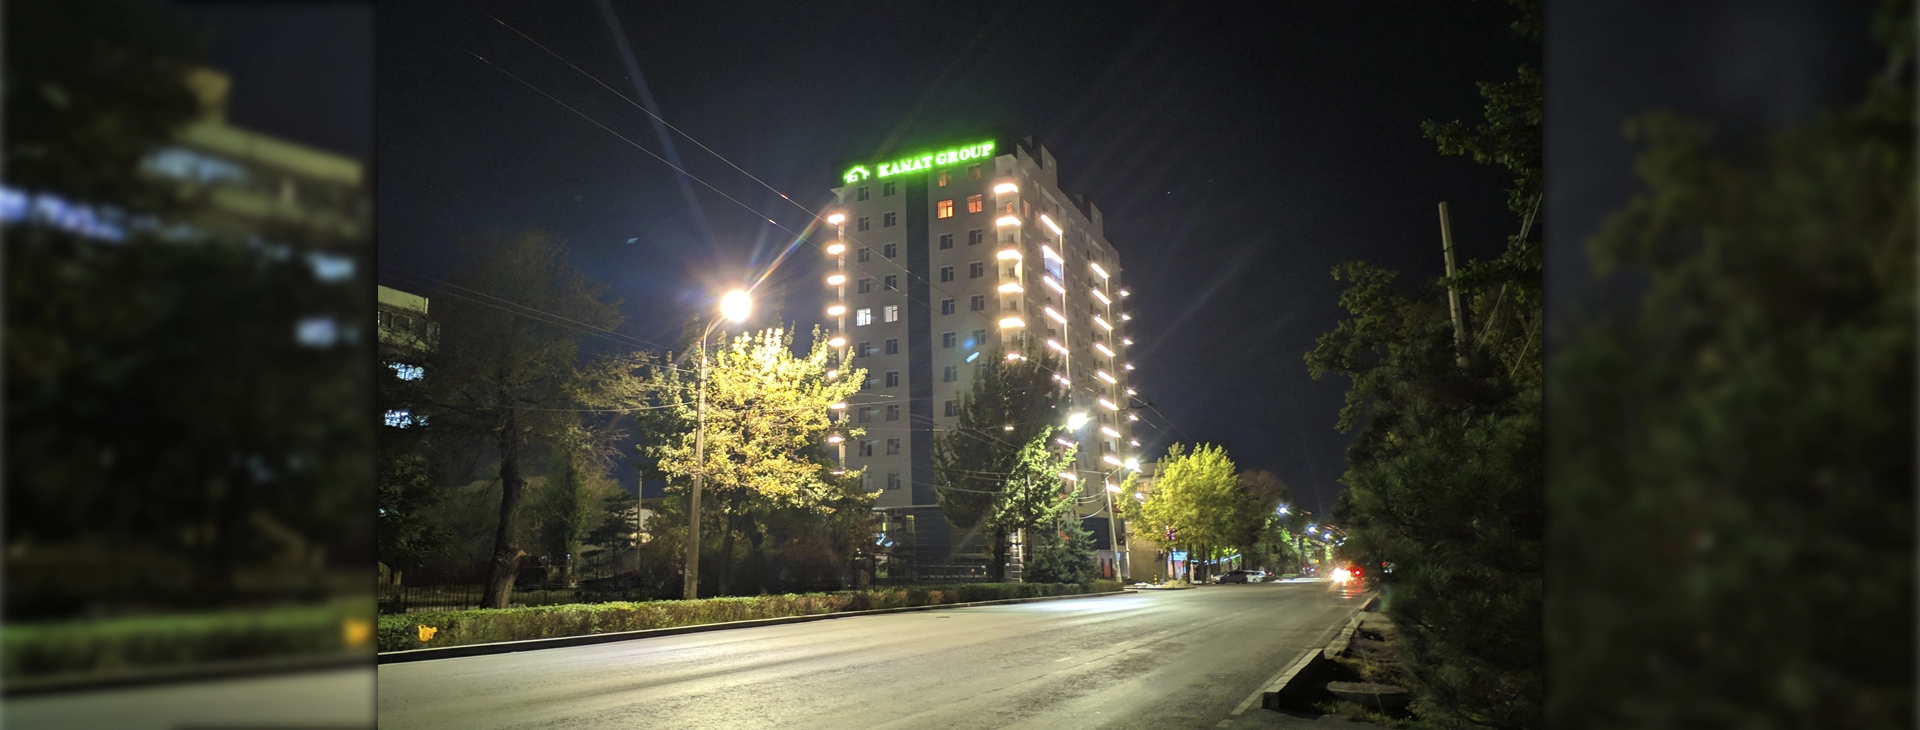 Освещение ЖК "Армада", г. Бишкек